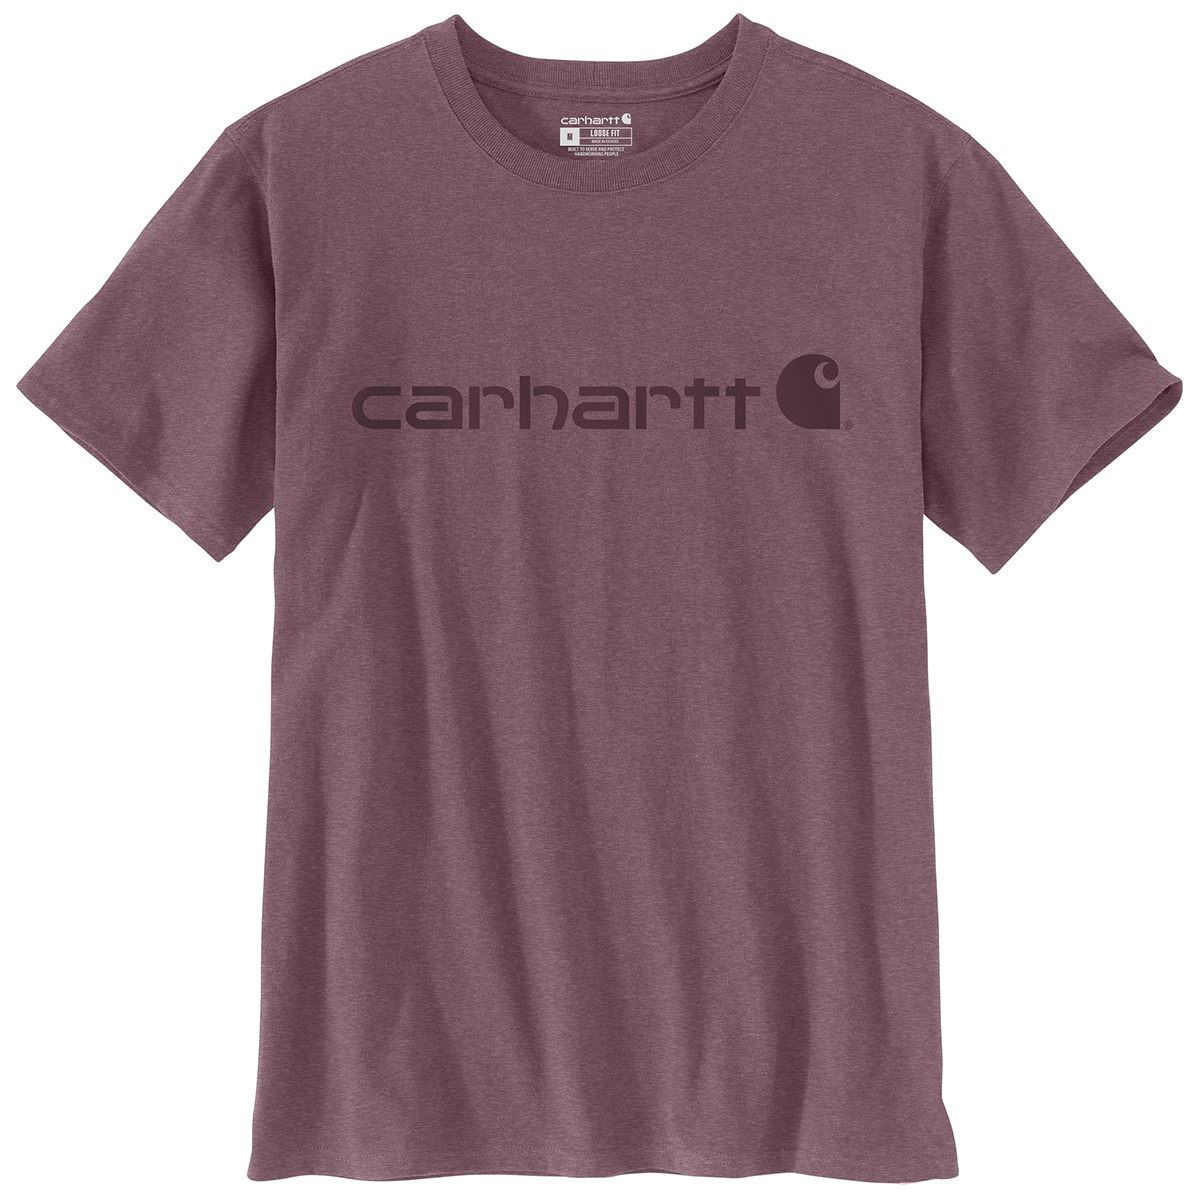 Carhartt Women's Short-Sleeve Graphic Tee